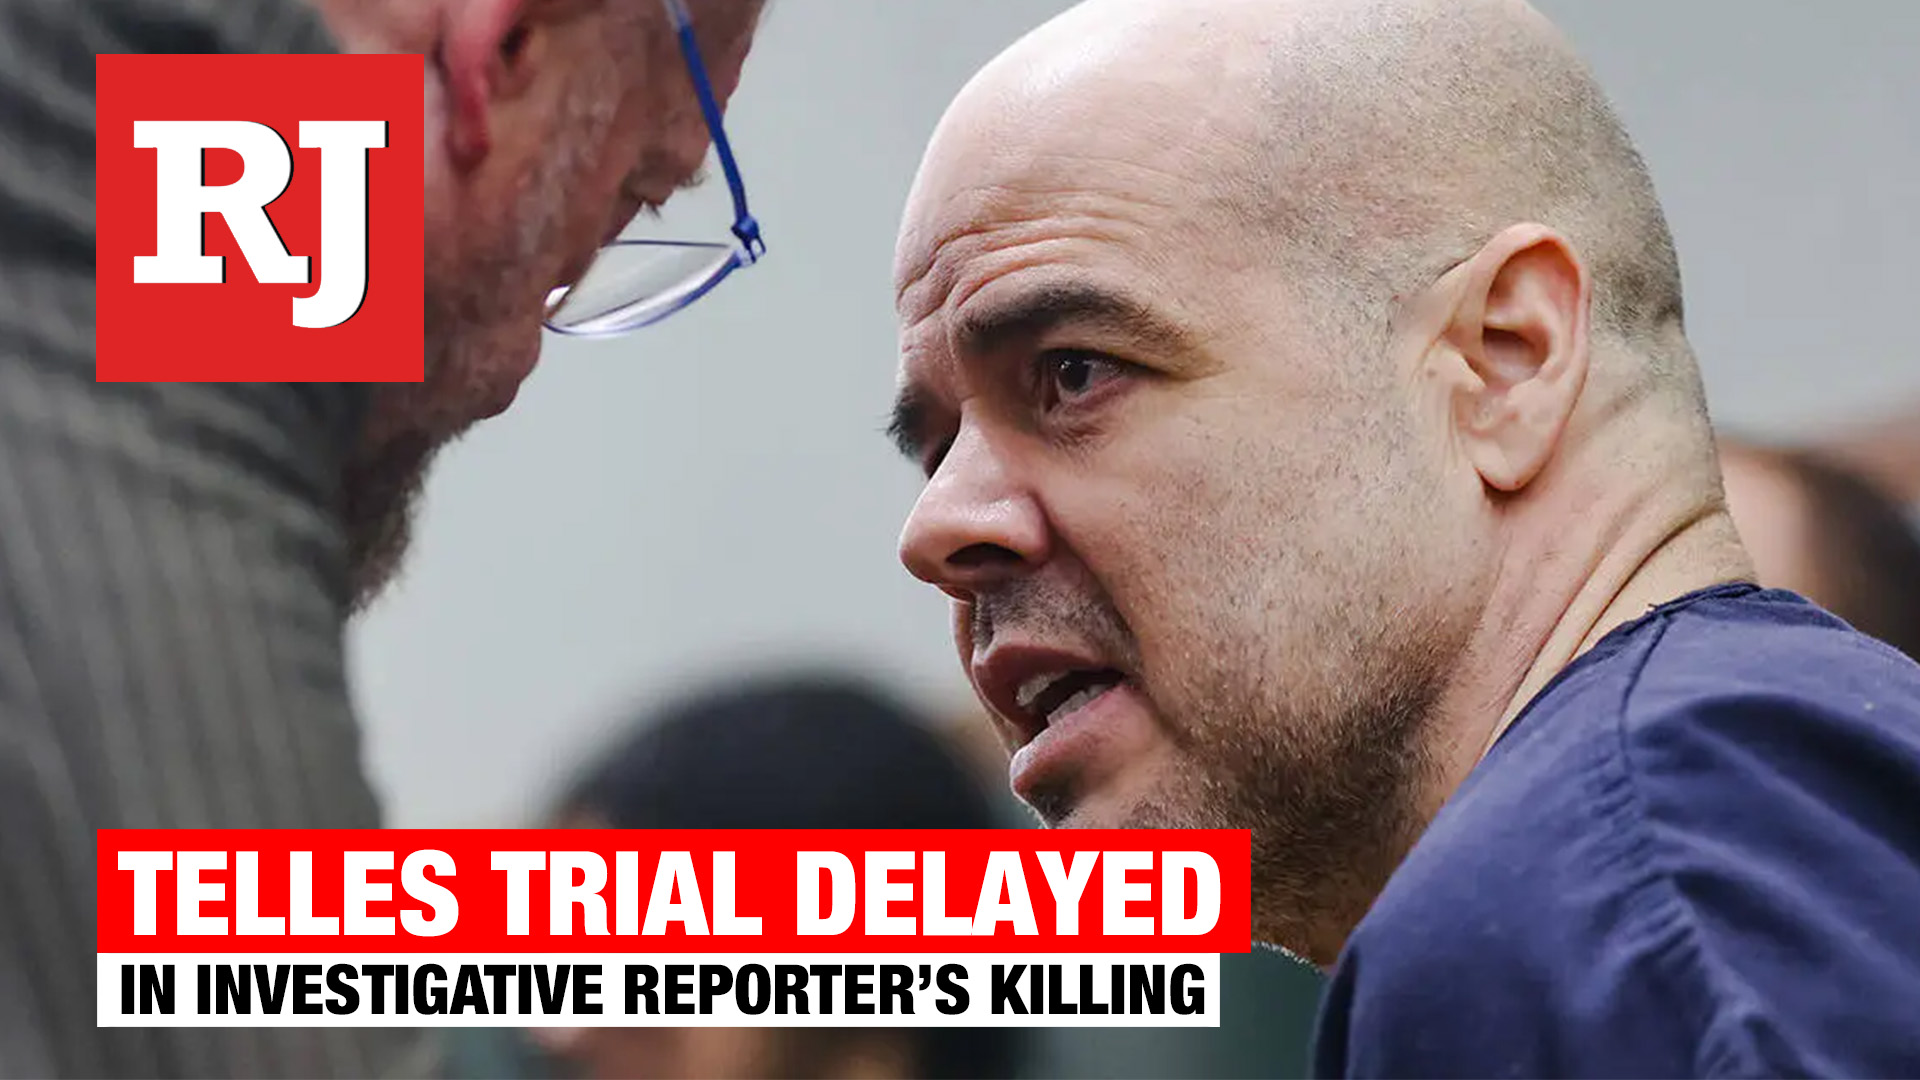 Robert Telles trial delayed